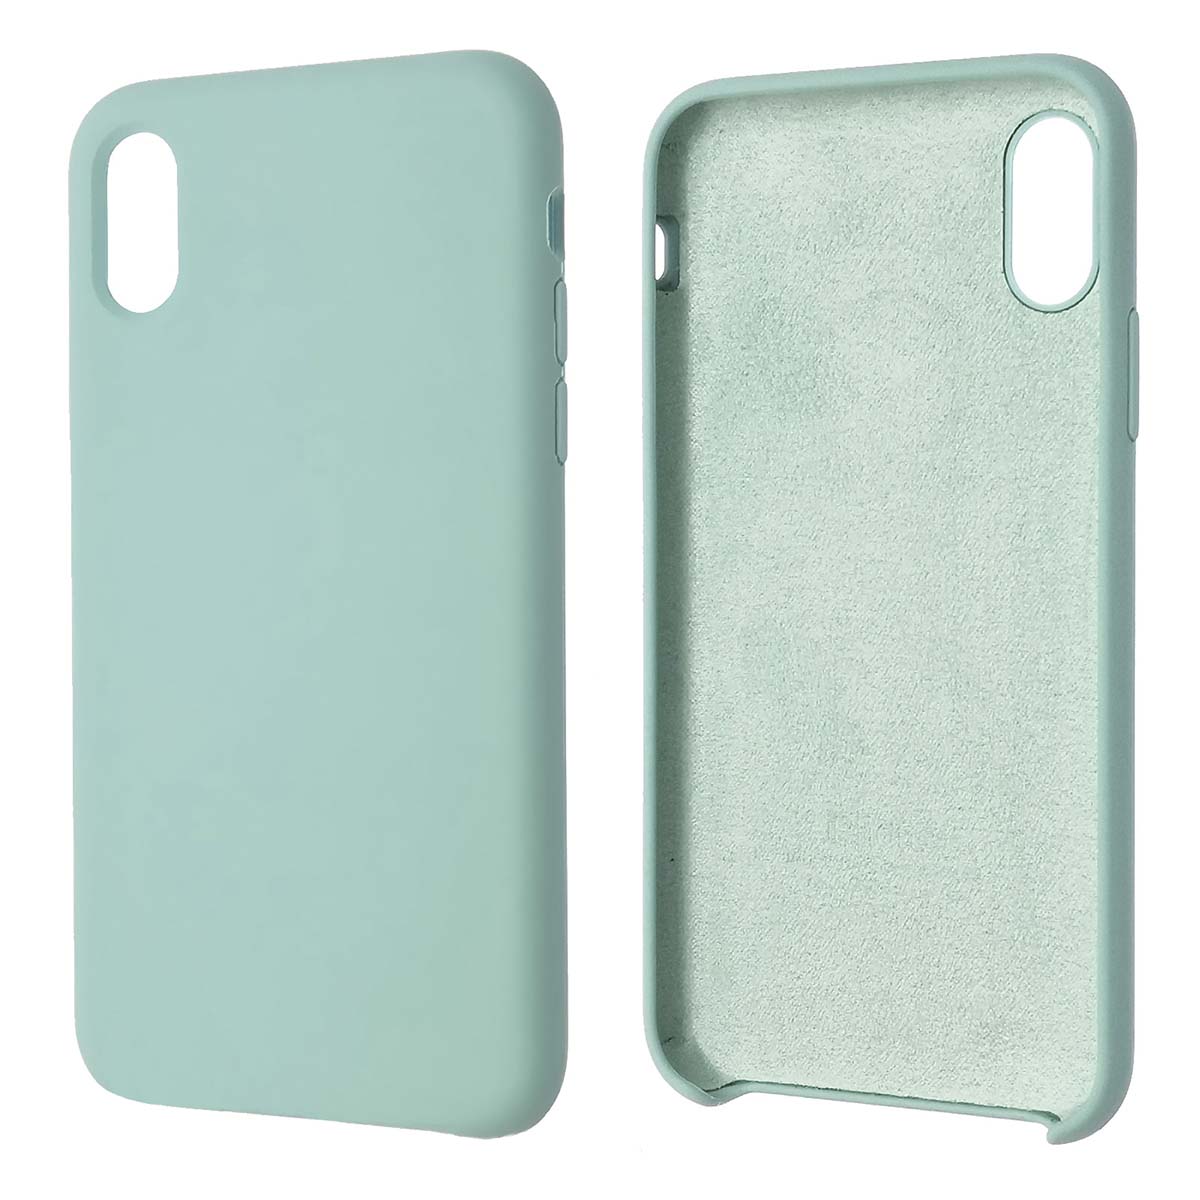 Чехол накладка Silicon Case для APPLE iPhone X, iPhone XS, силикон, бархат, цвет светло бирюзовый